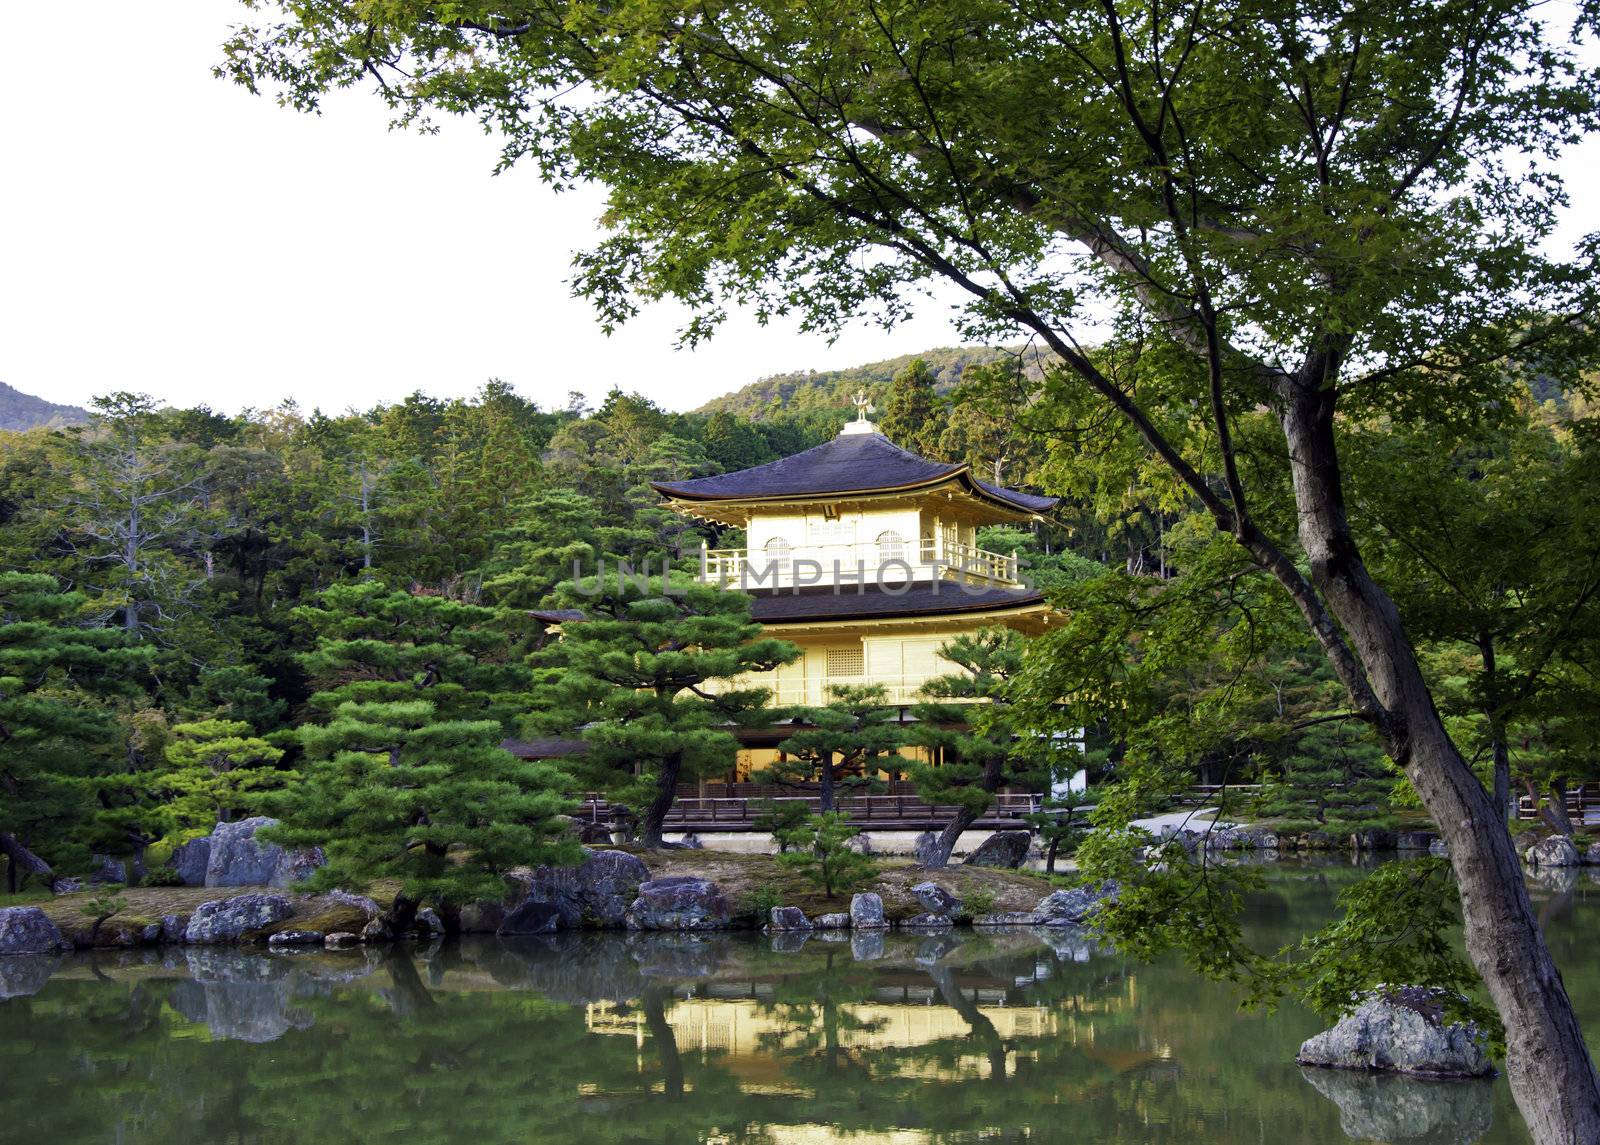 Kinkakuji in autumn season - the famous Golden Pavilion at Kyoto, Japan. 